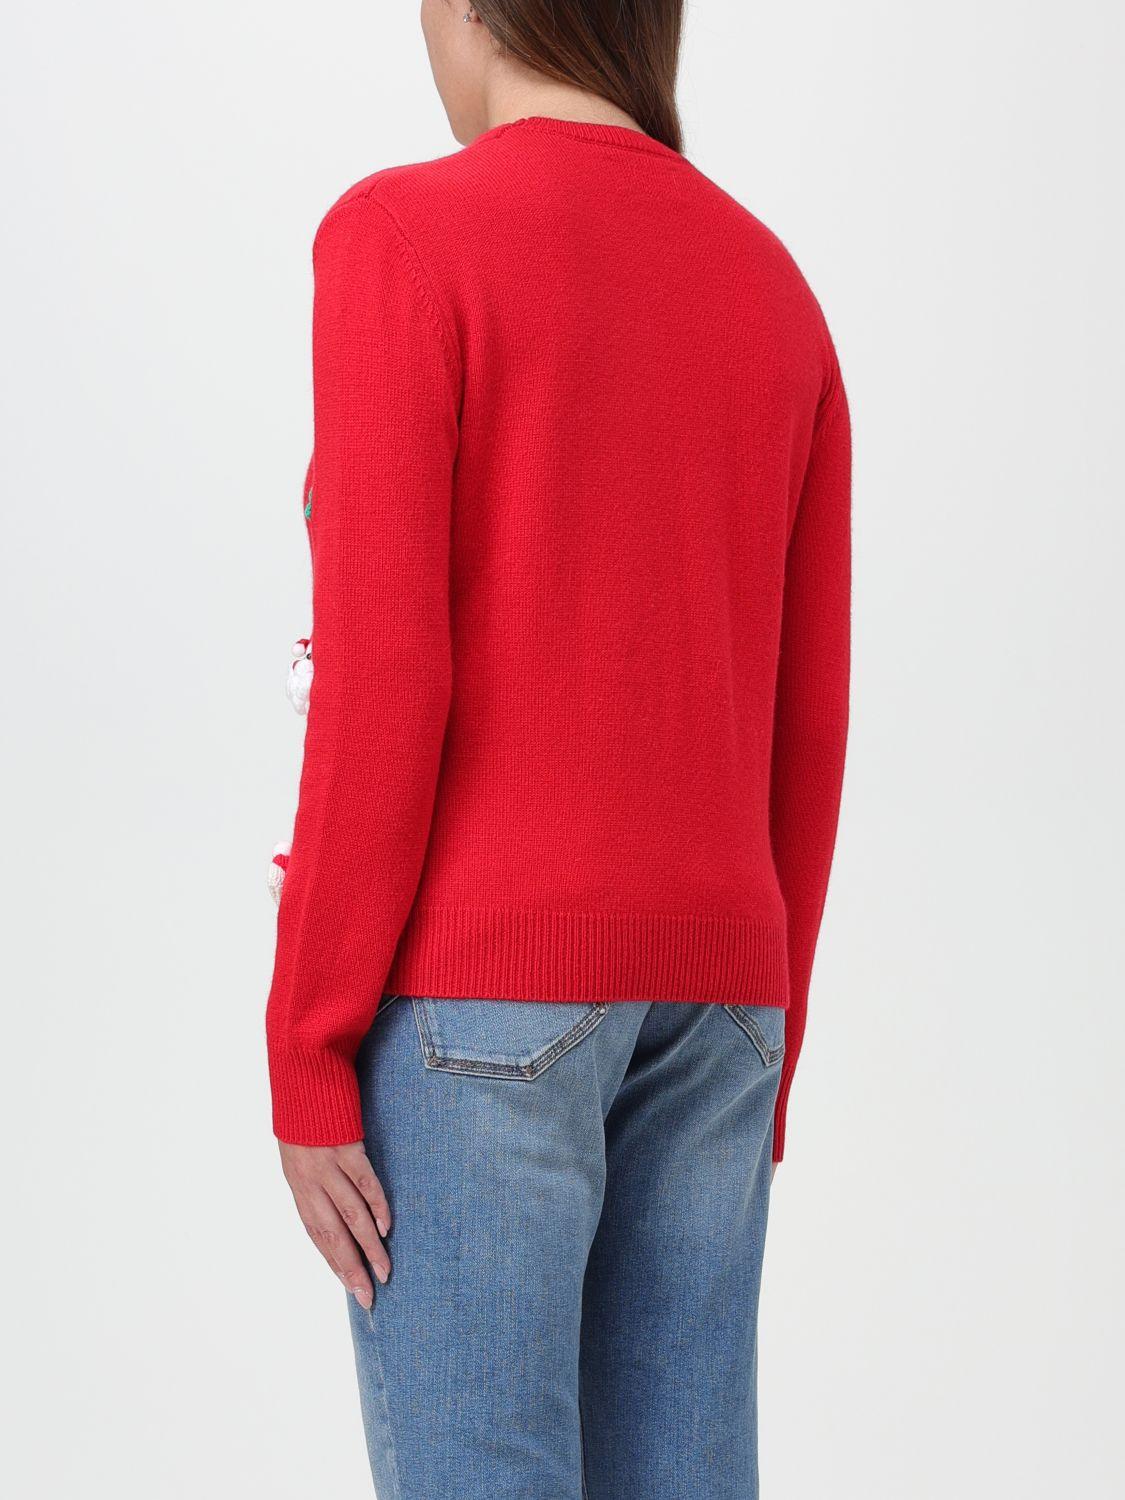 8 By YOOX ARGYLE JACQUARD KNIT SWEATER, Lilac Women's Sweater